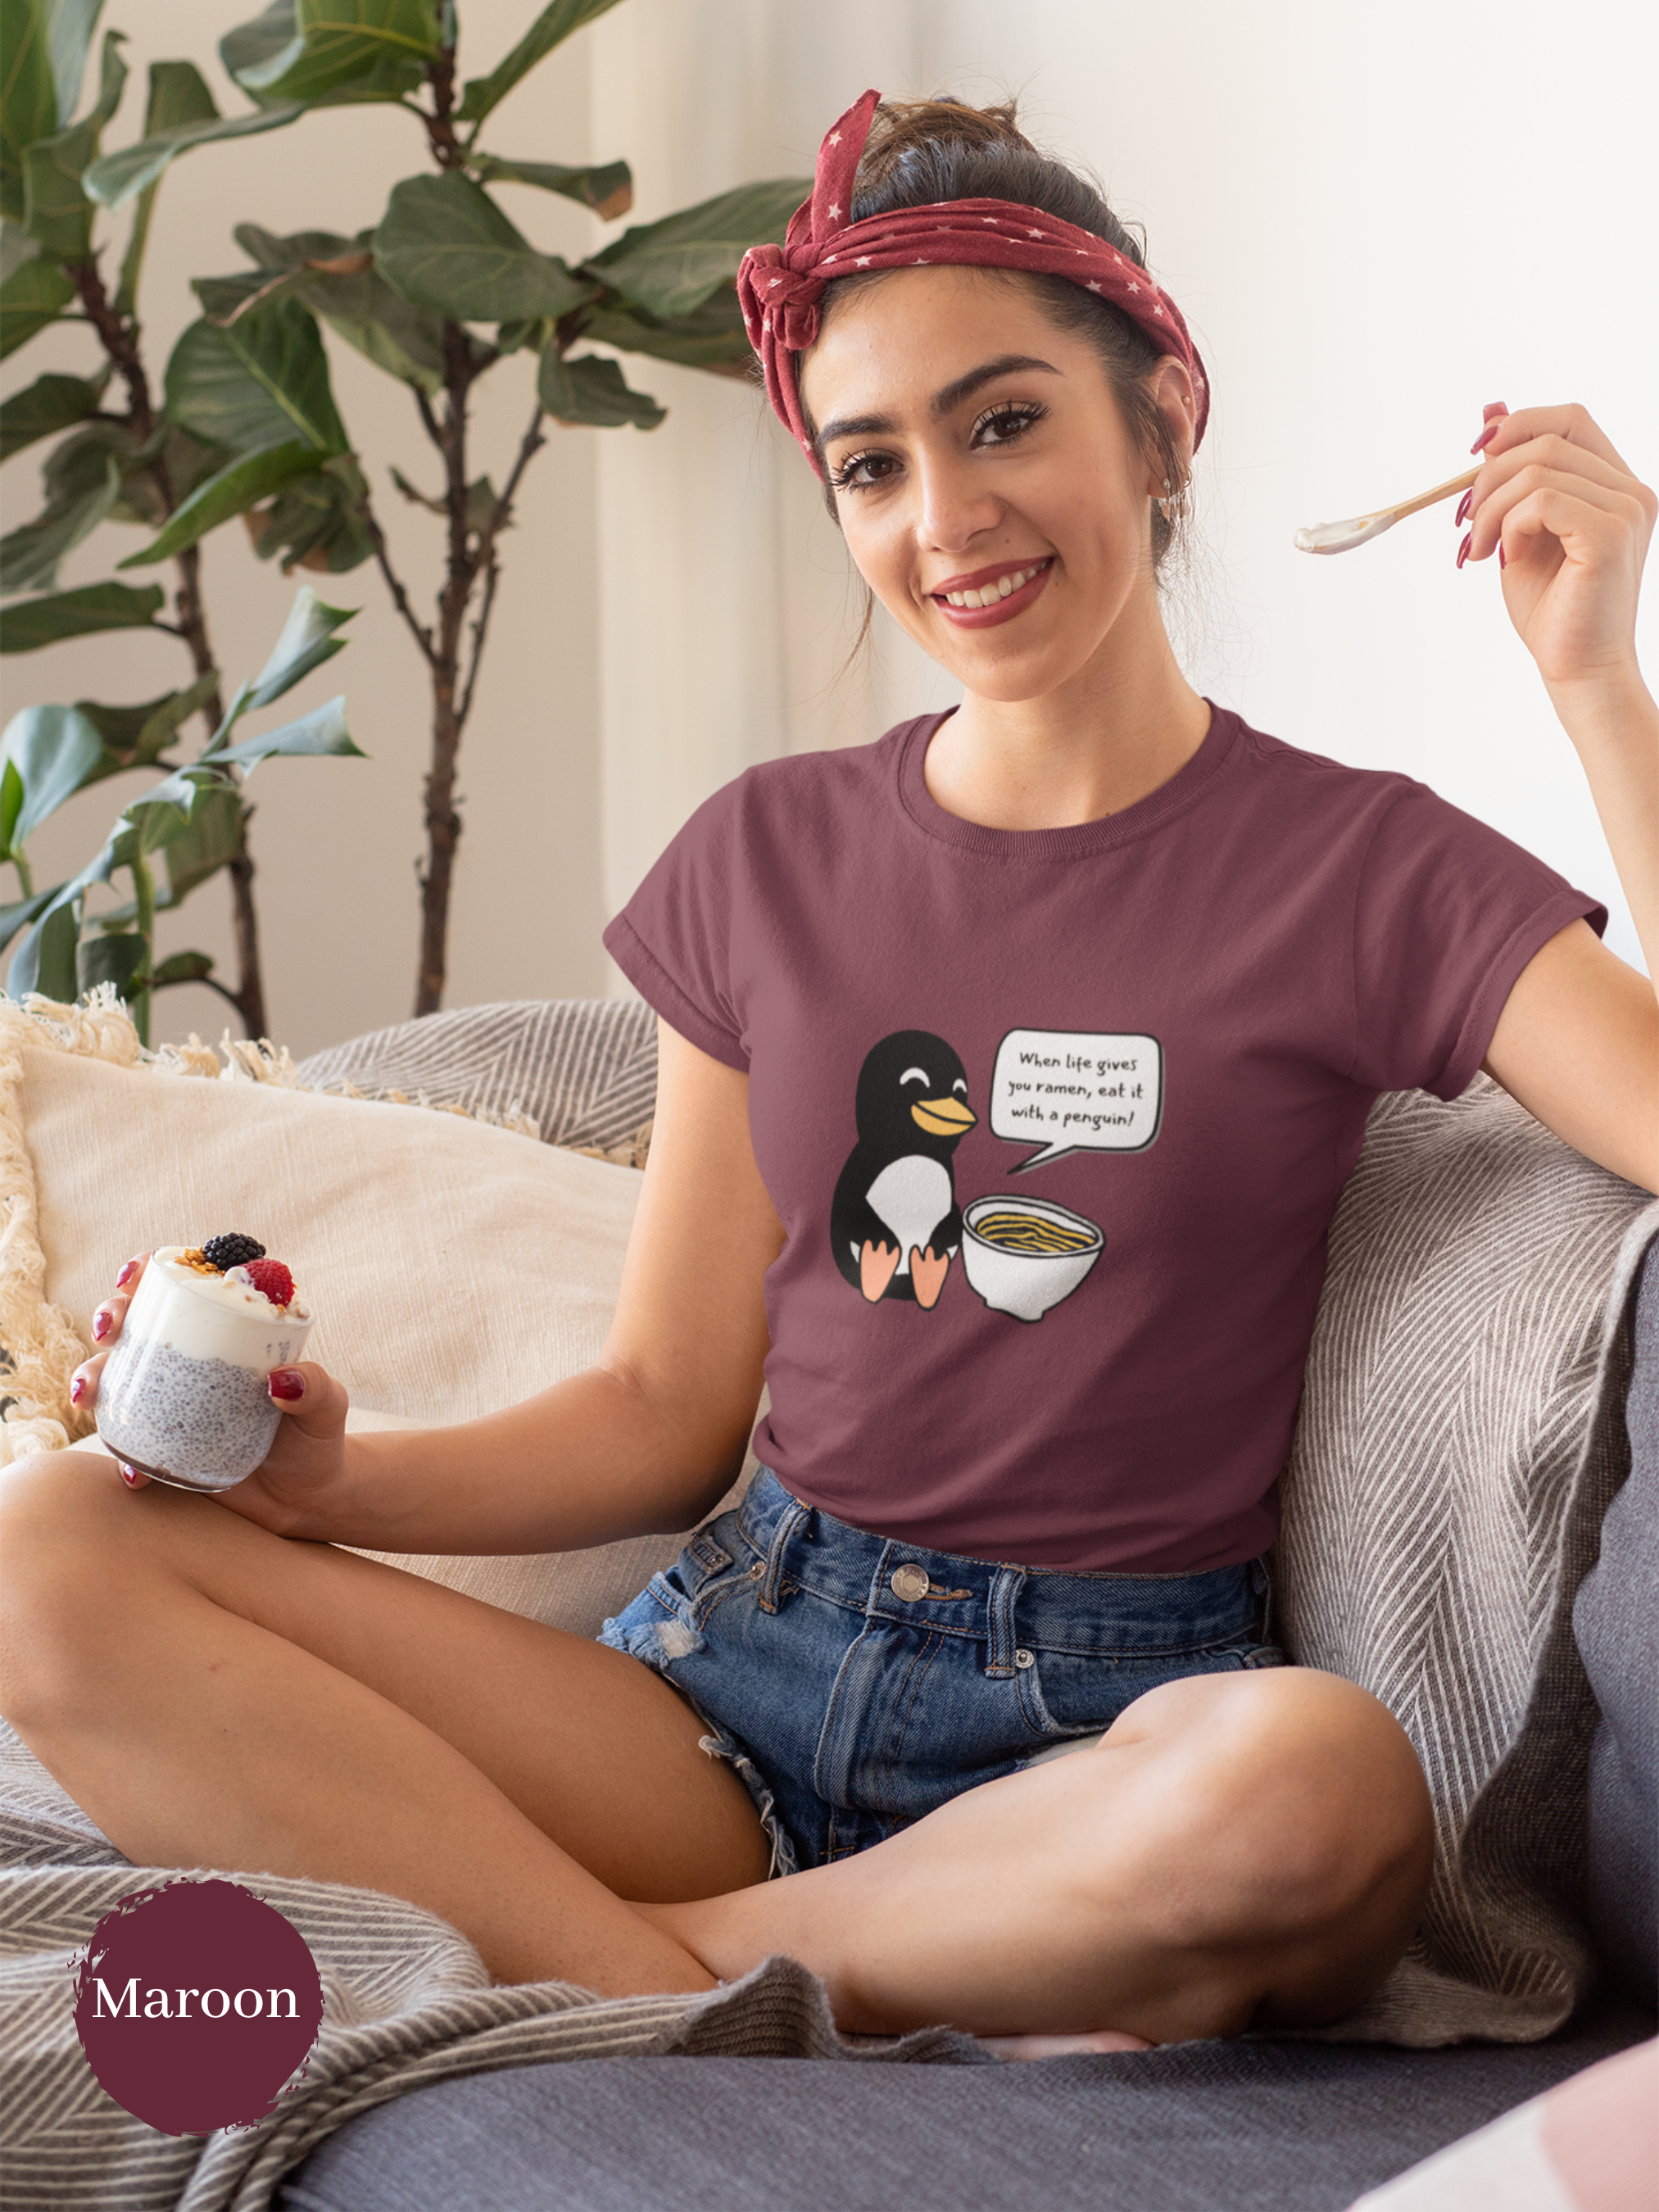 Ramen T-shirt: "When Life Gives You Ramen, Eat It With a Penguin!" - Japanese Foodie Shirt with Cute Ramen Art